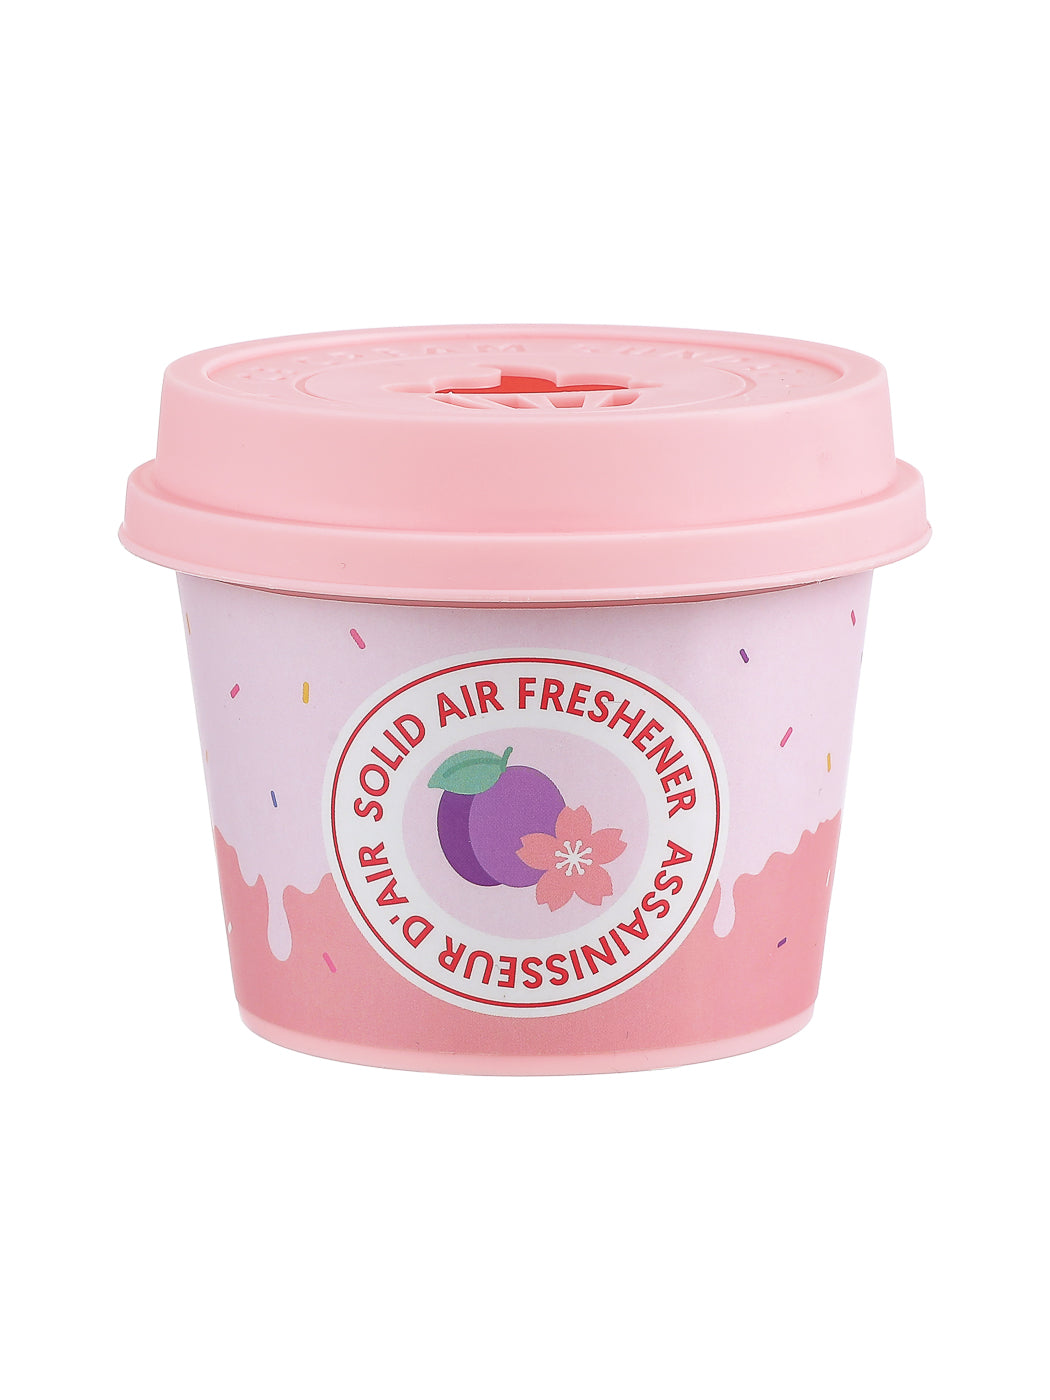 Cherry Blossom & Plum Ice Cream Solid Air Freshener